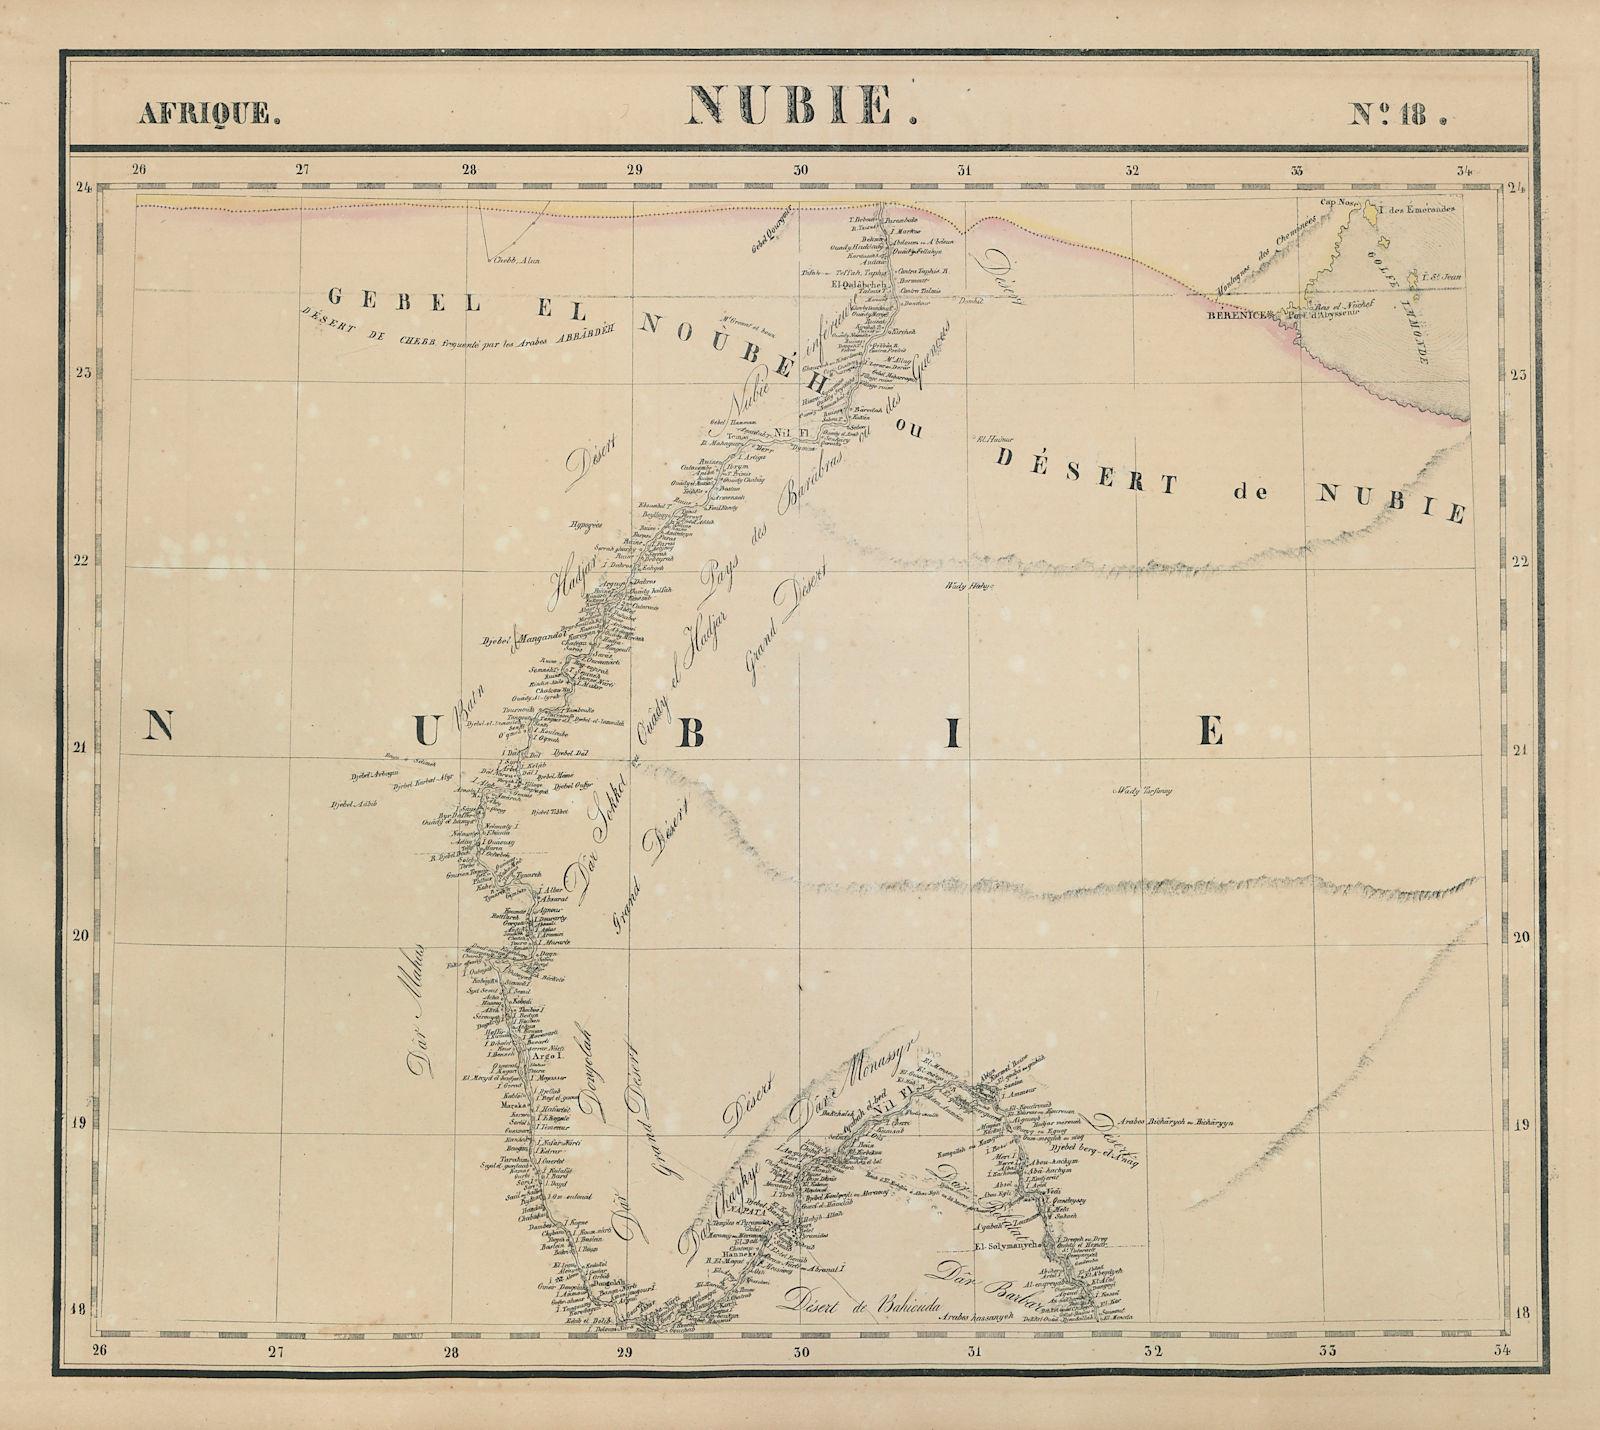 Associate Product Afrique. Nubie #18. Nile valley in Sudan & southern Egypt. VANDERMAELEN 1827 map